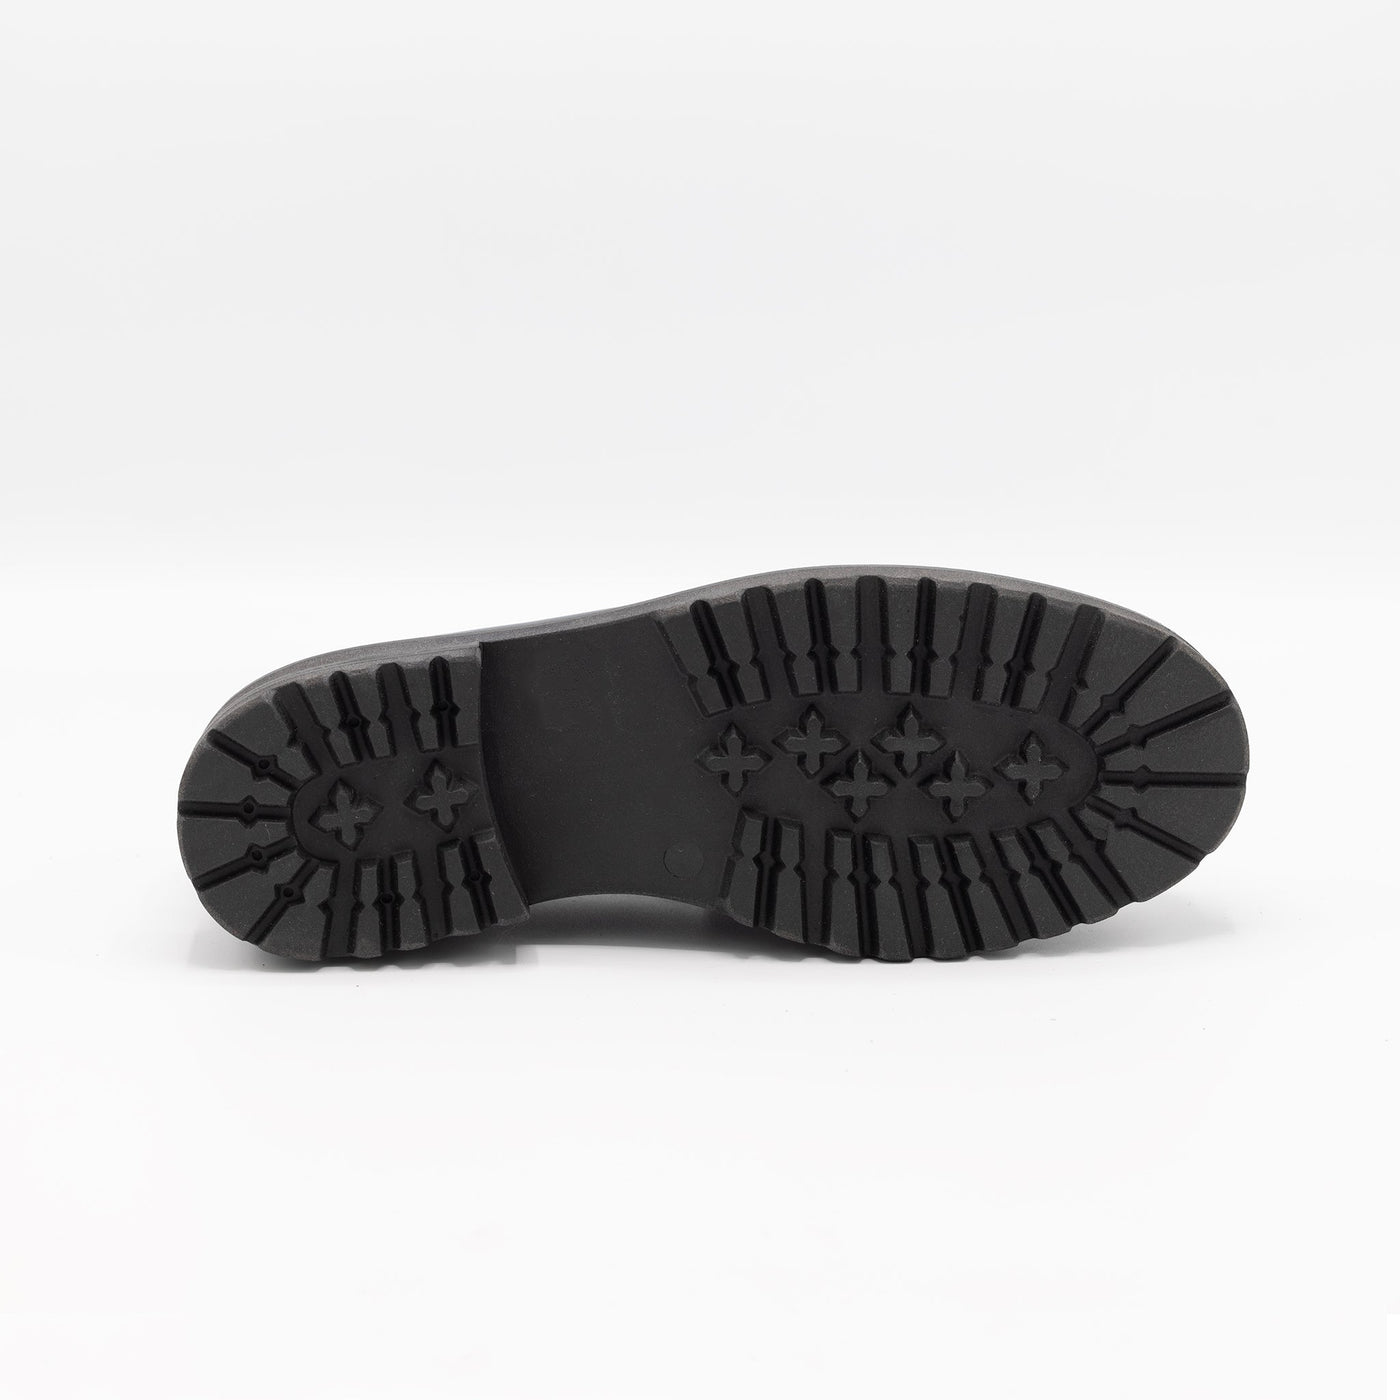 Chuky rubber lug sole